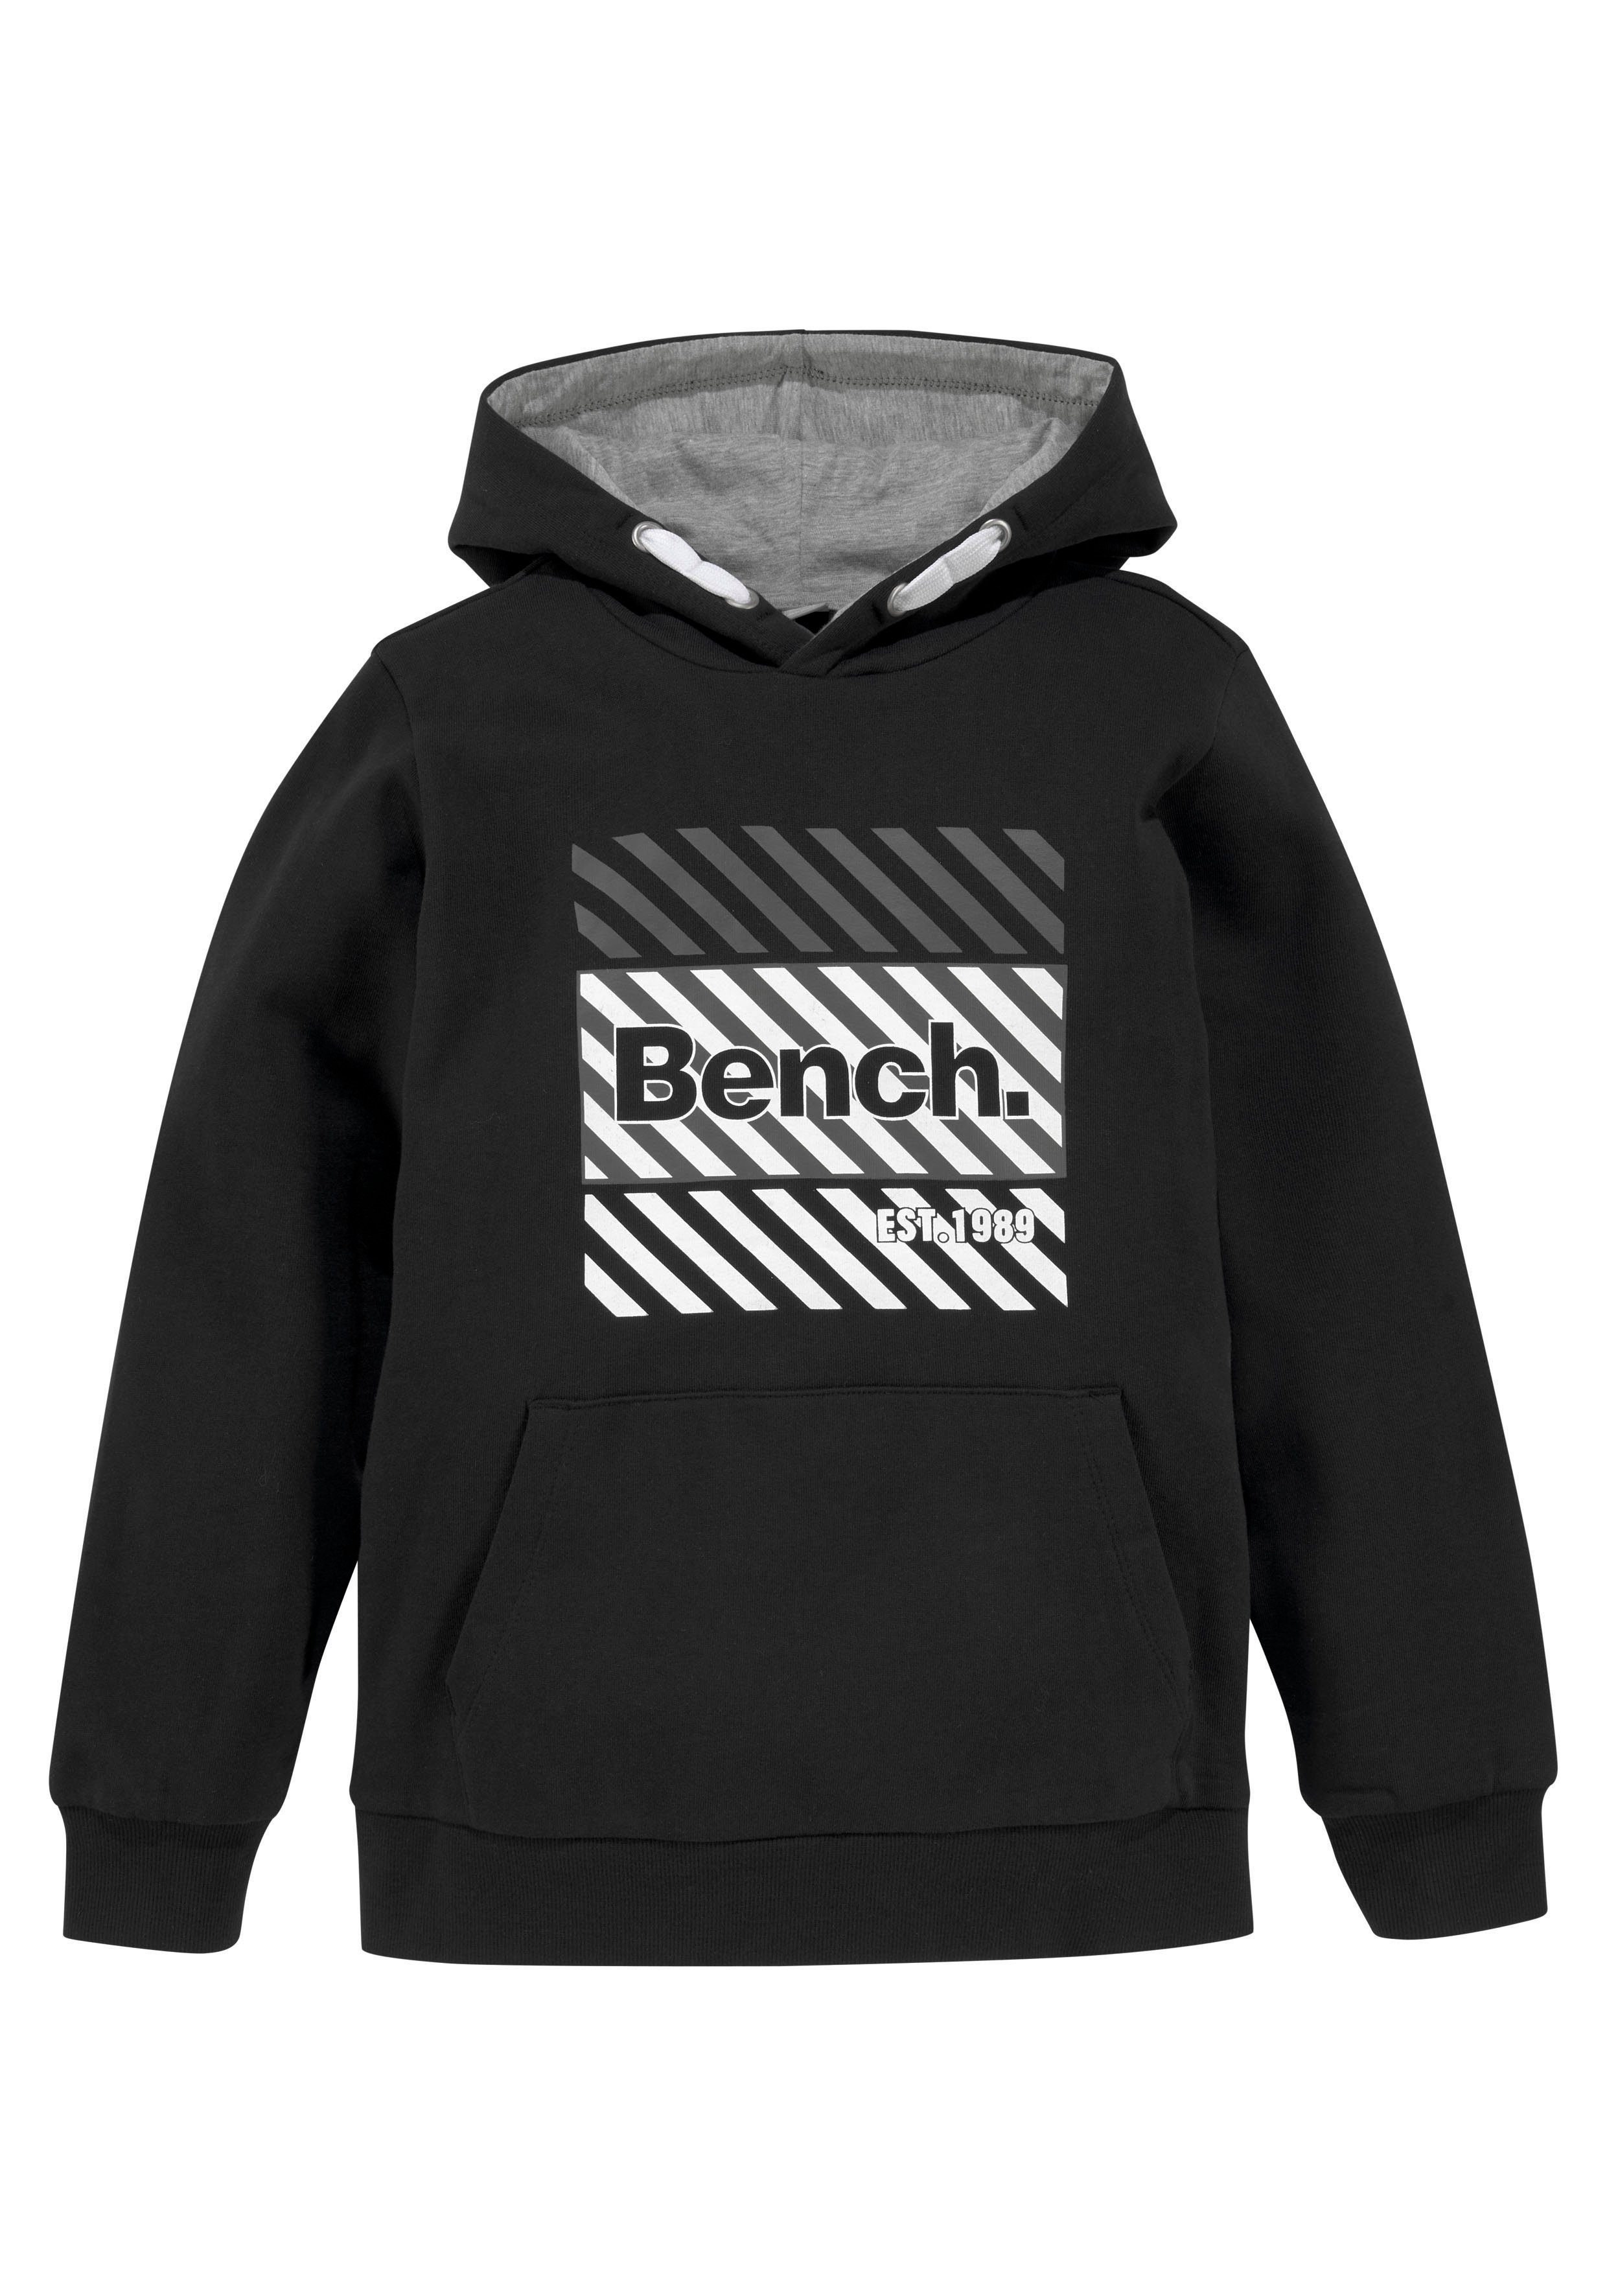 Bench. Black&White Kapuzensweatshirt Druck mit trendigem